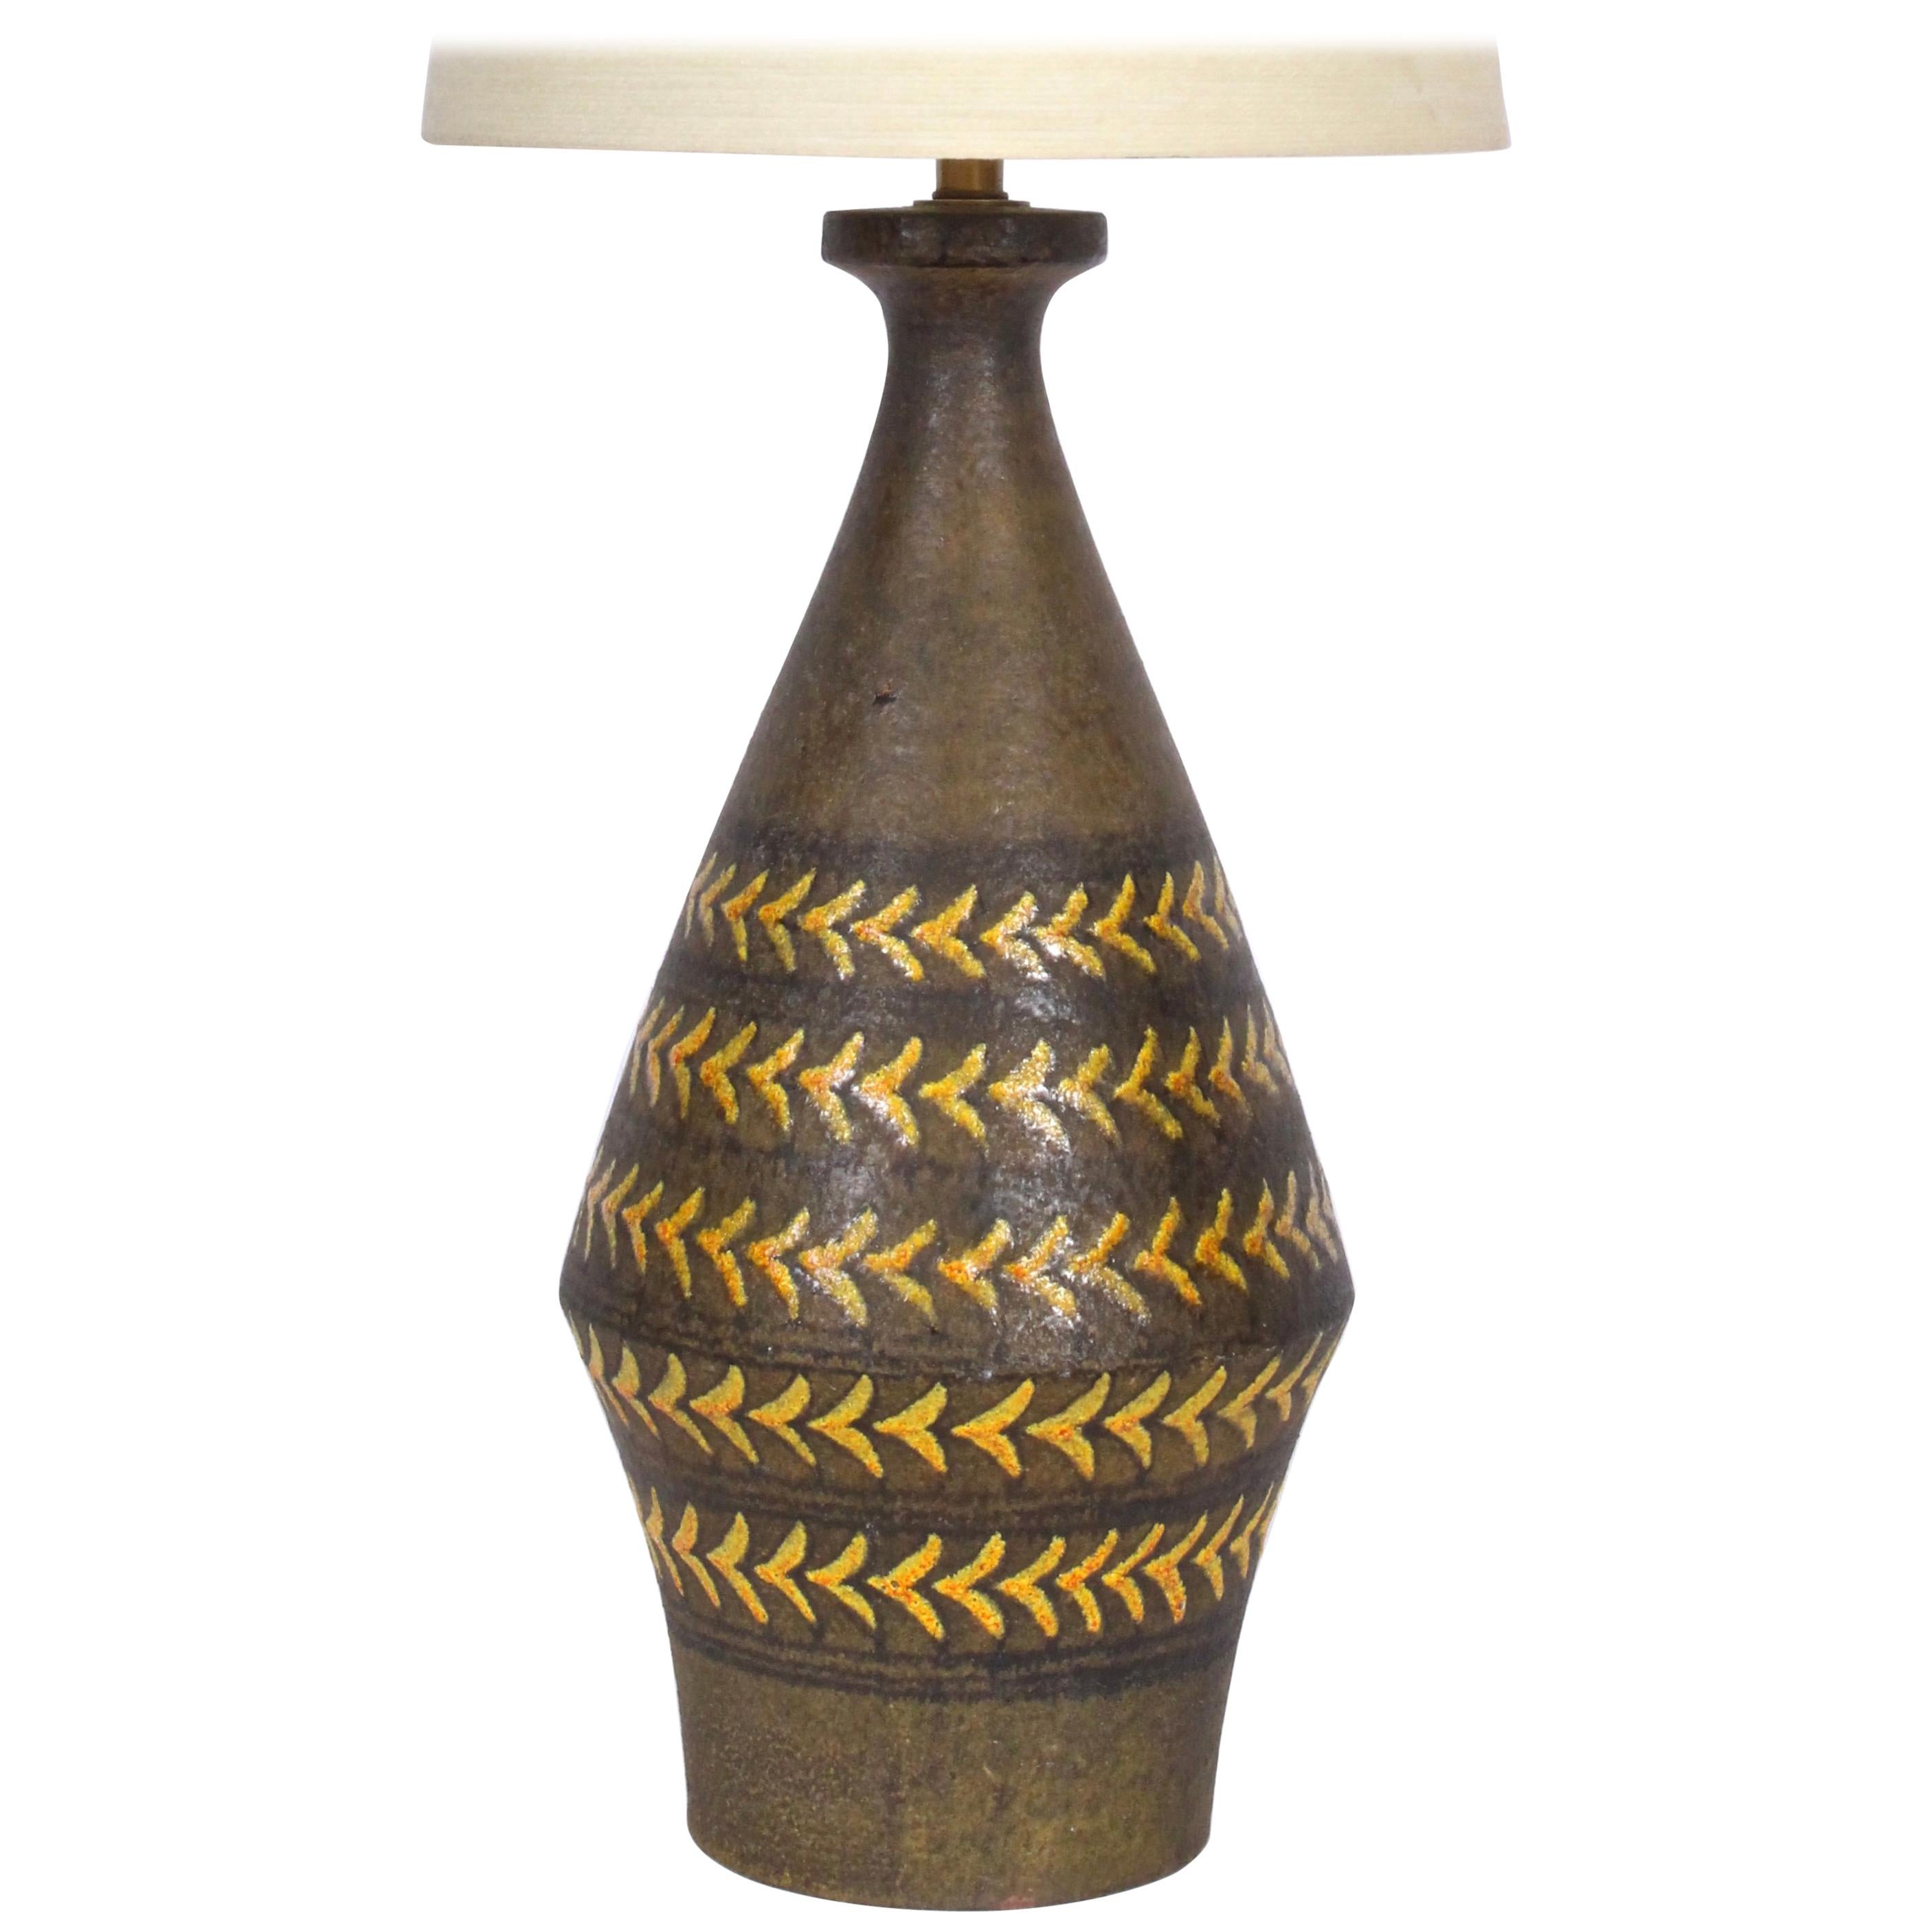 Substantial Aldo Londi for Bitossi Cocoa & Yellow "Arrowhead" Pottery Table Lamp